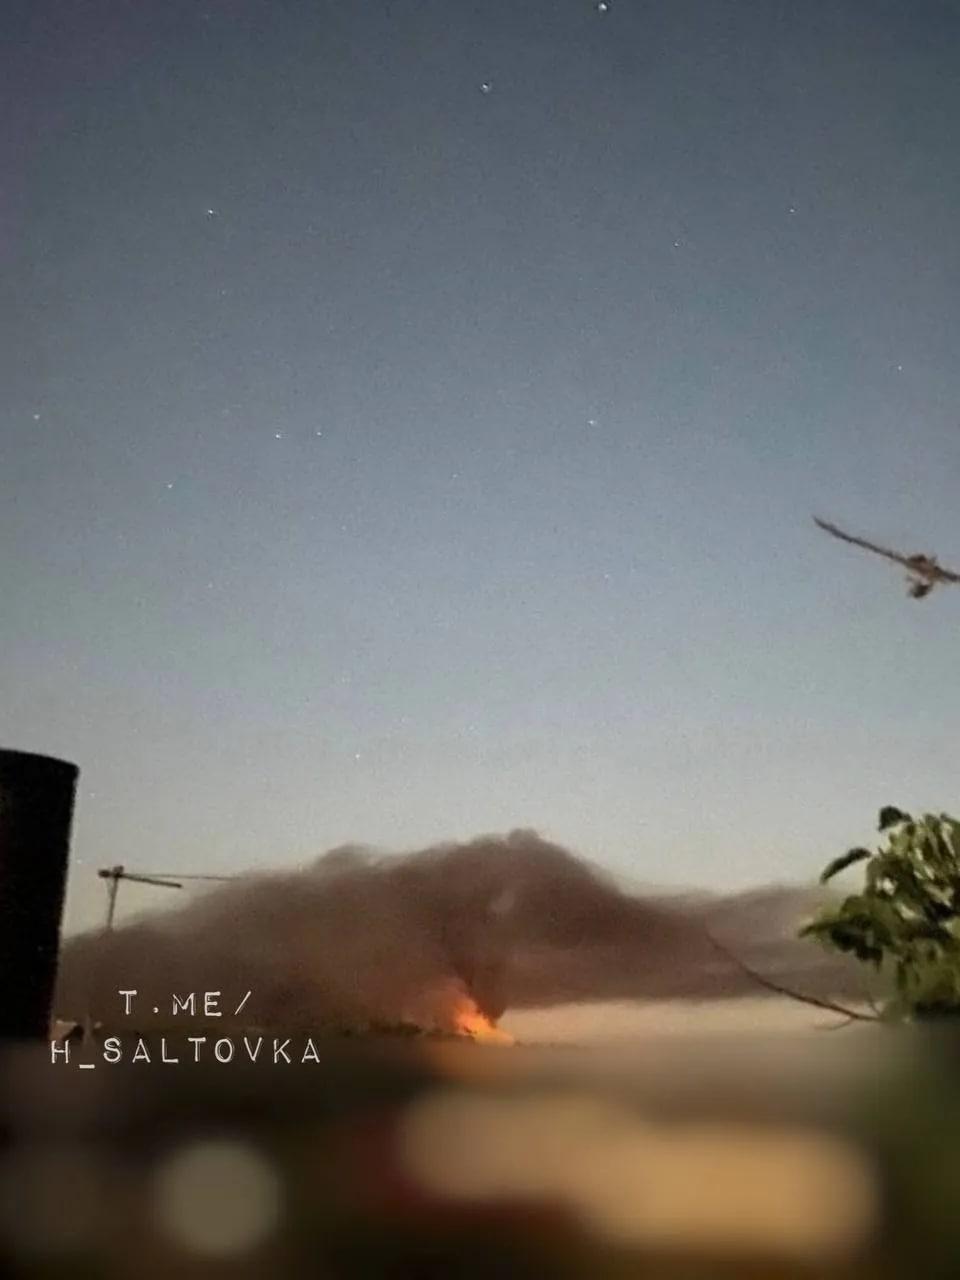 На околицях міста зафіксовано пожежу / фото Tg-канал "Салтовка"